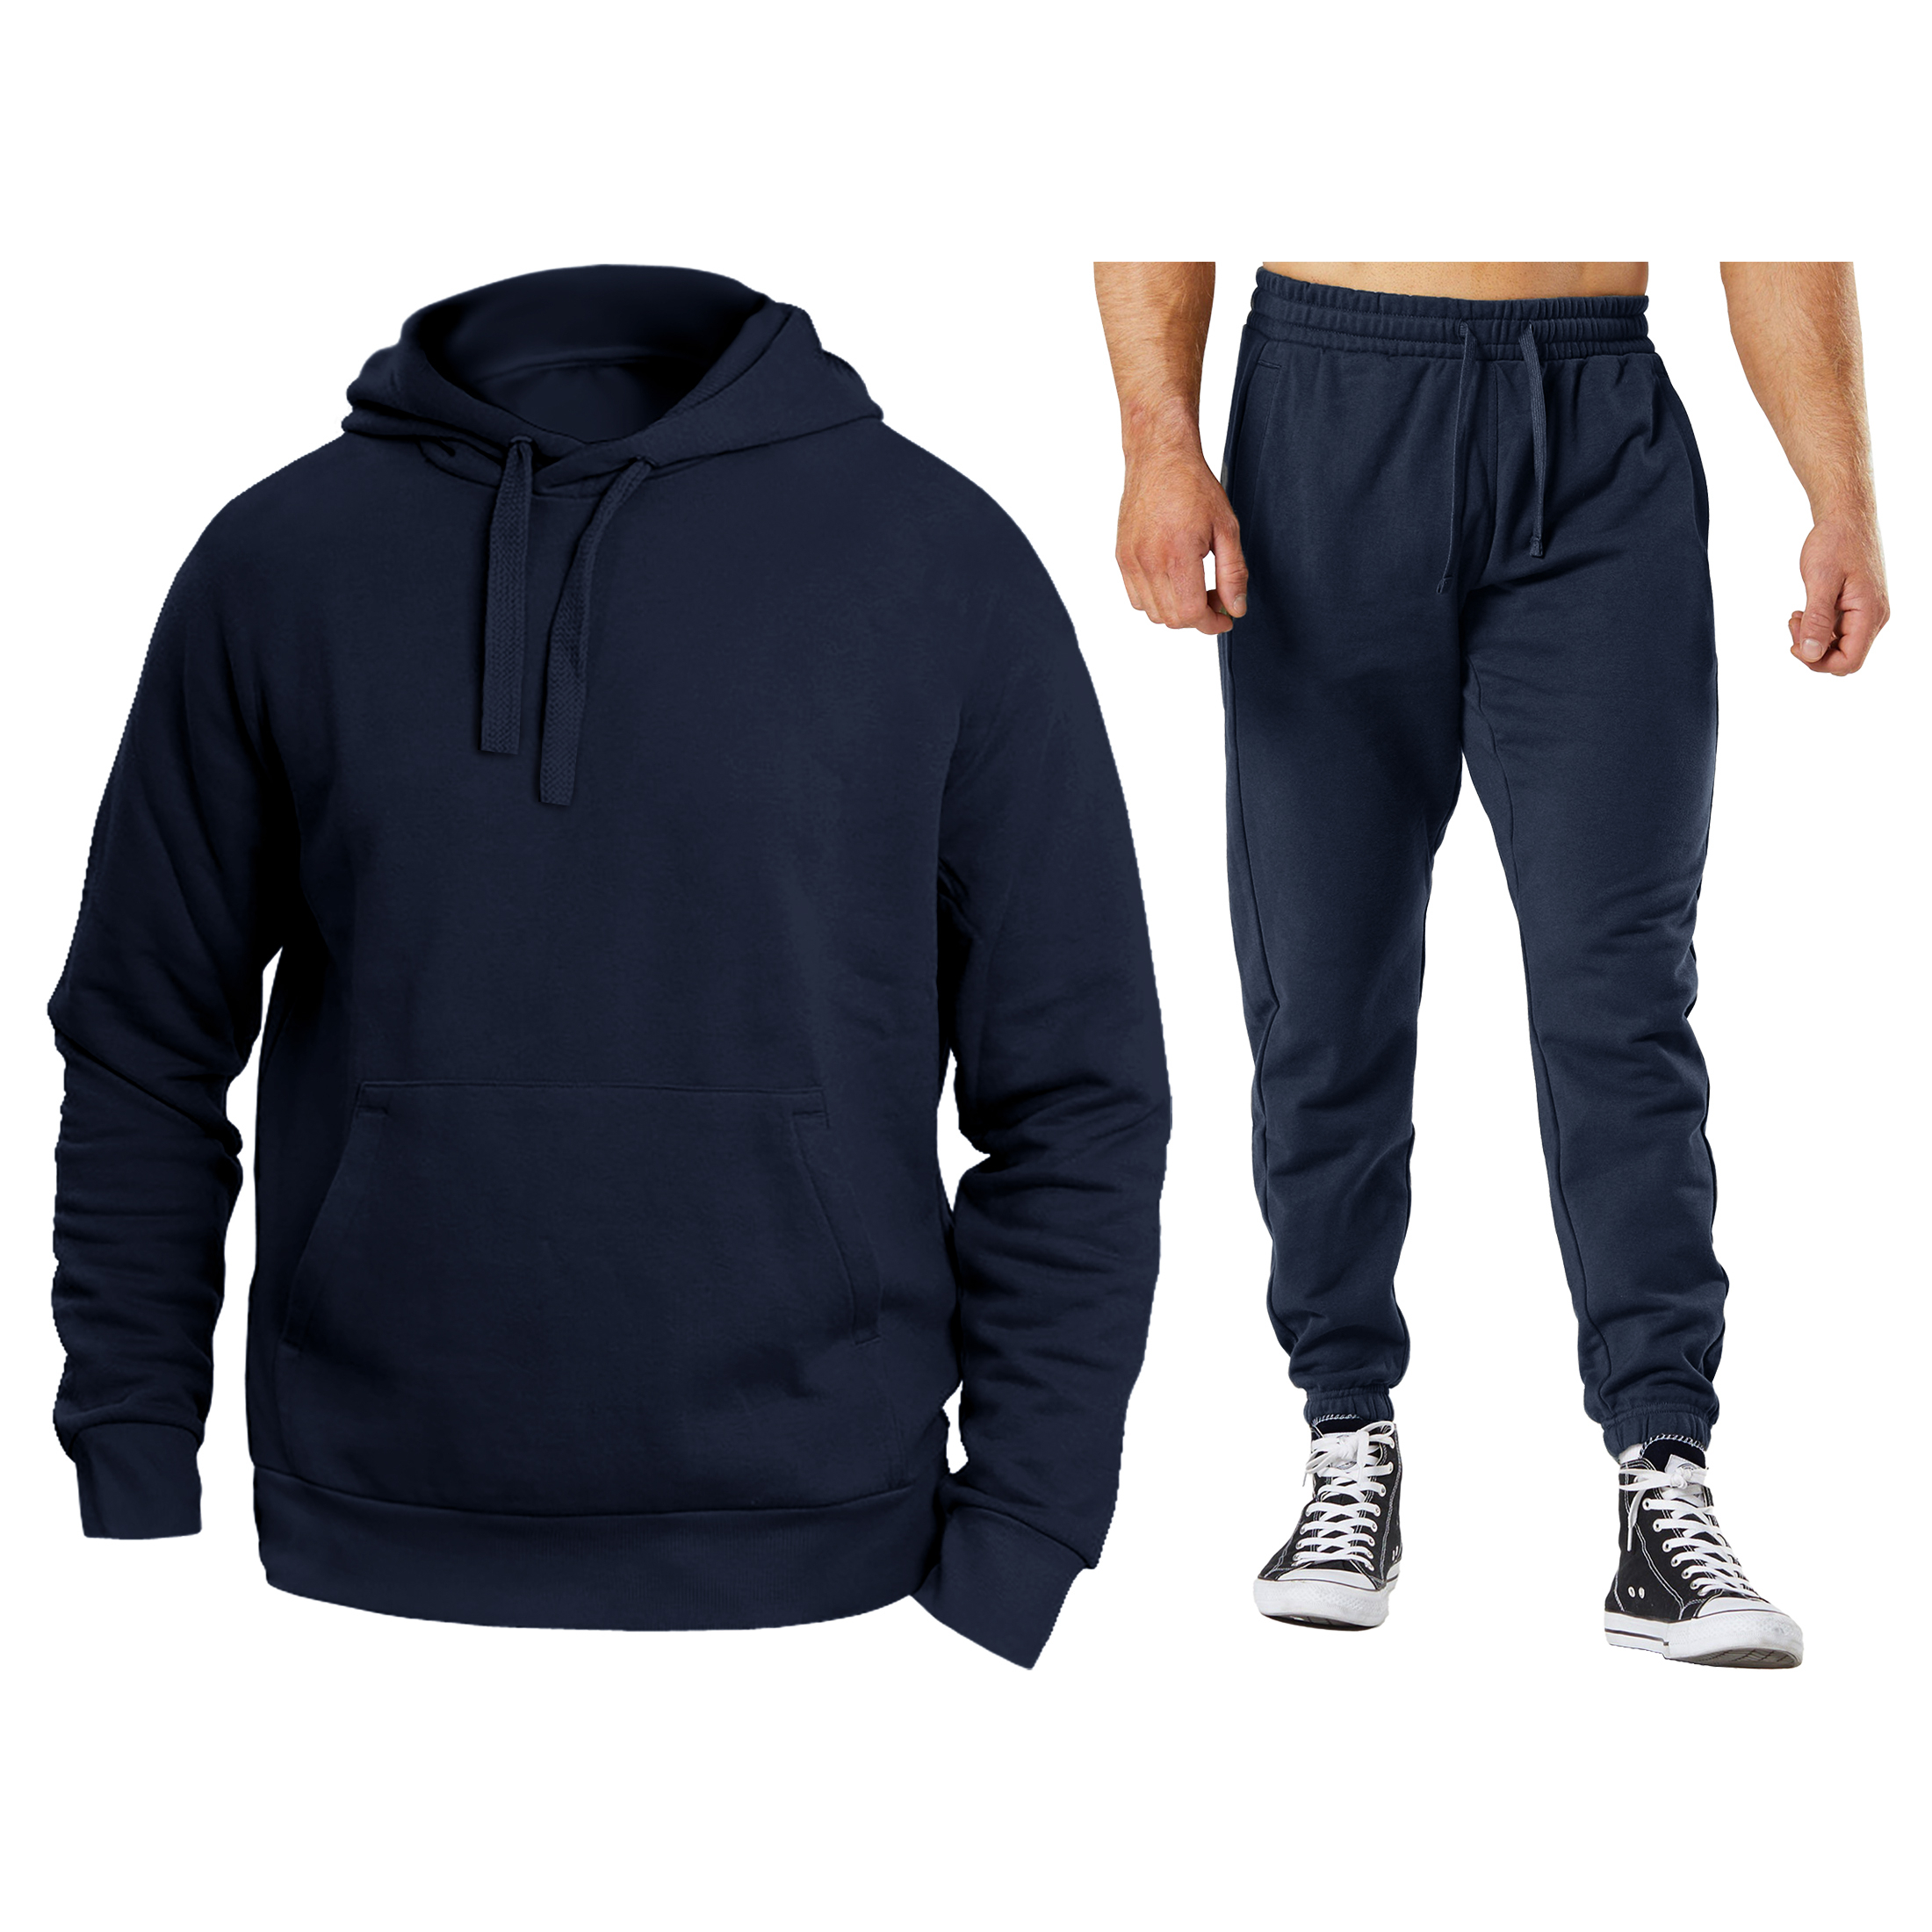 Men's Athletic Warm Jogging Pullover Active Sweatsuit - Grey, Large